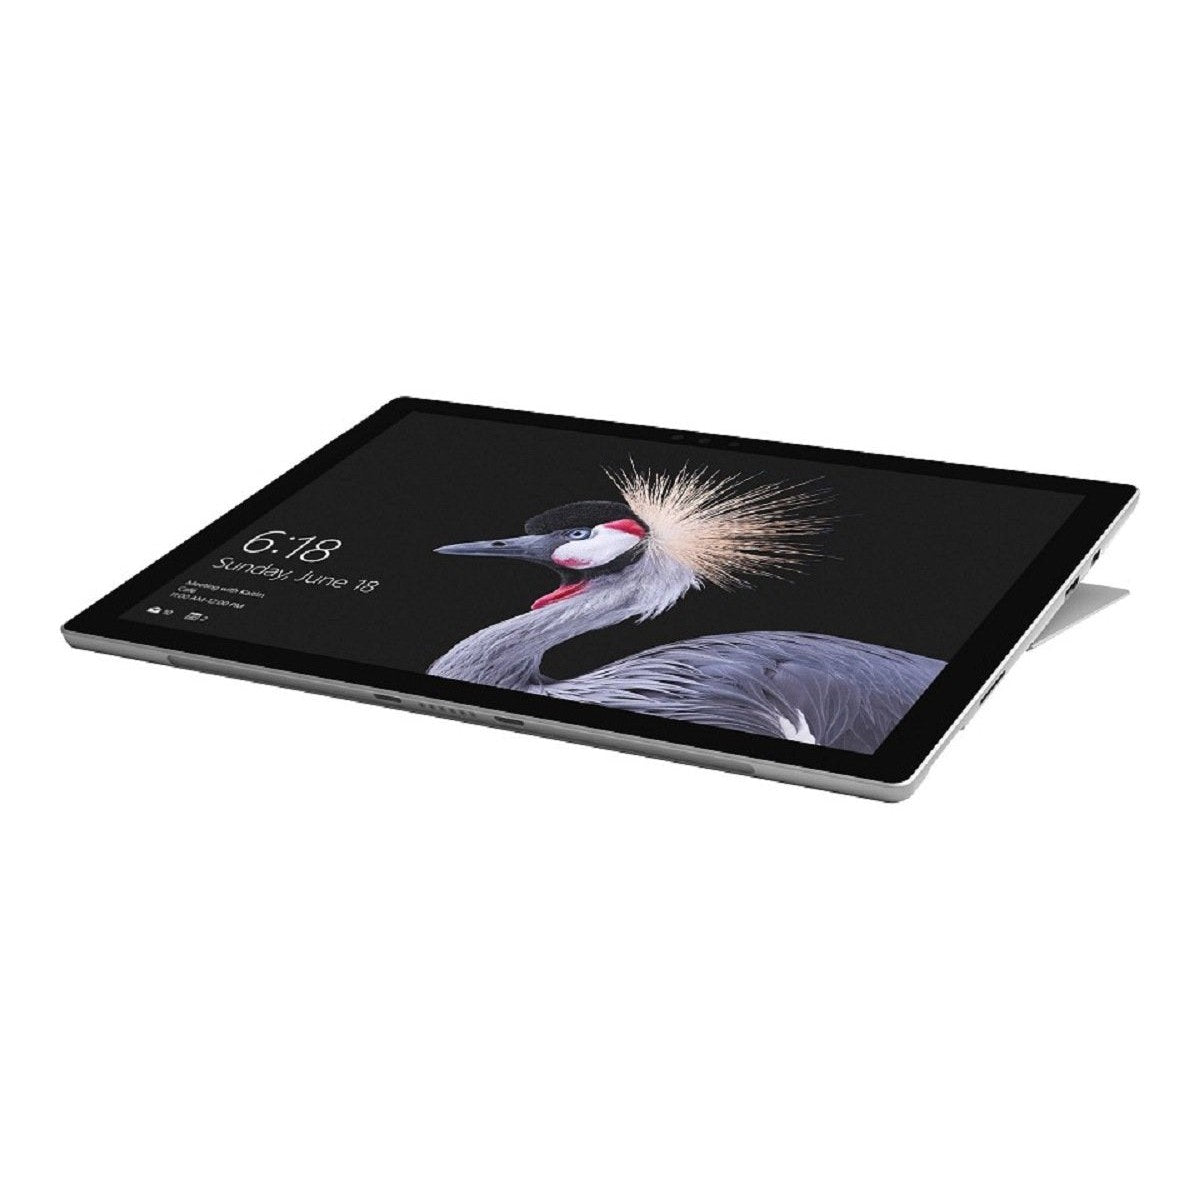 Microsoft Surface Pro 5th Generation 1796, Intel Core i5 7th Generation, 8GB RAM, 256GB SSD, 12.3", Silver